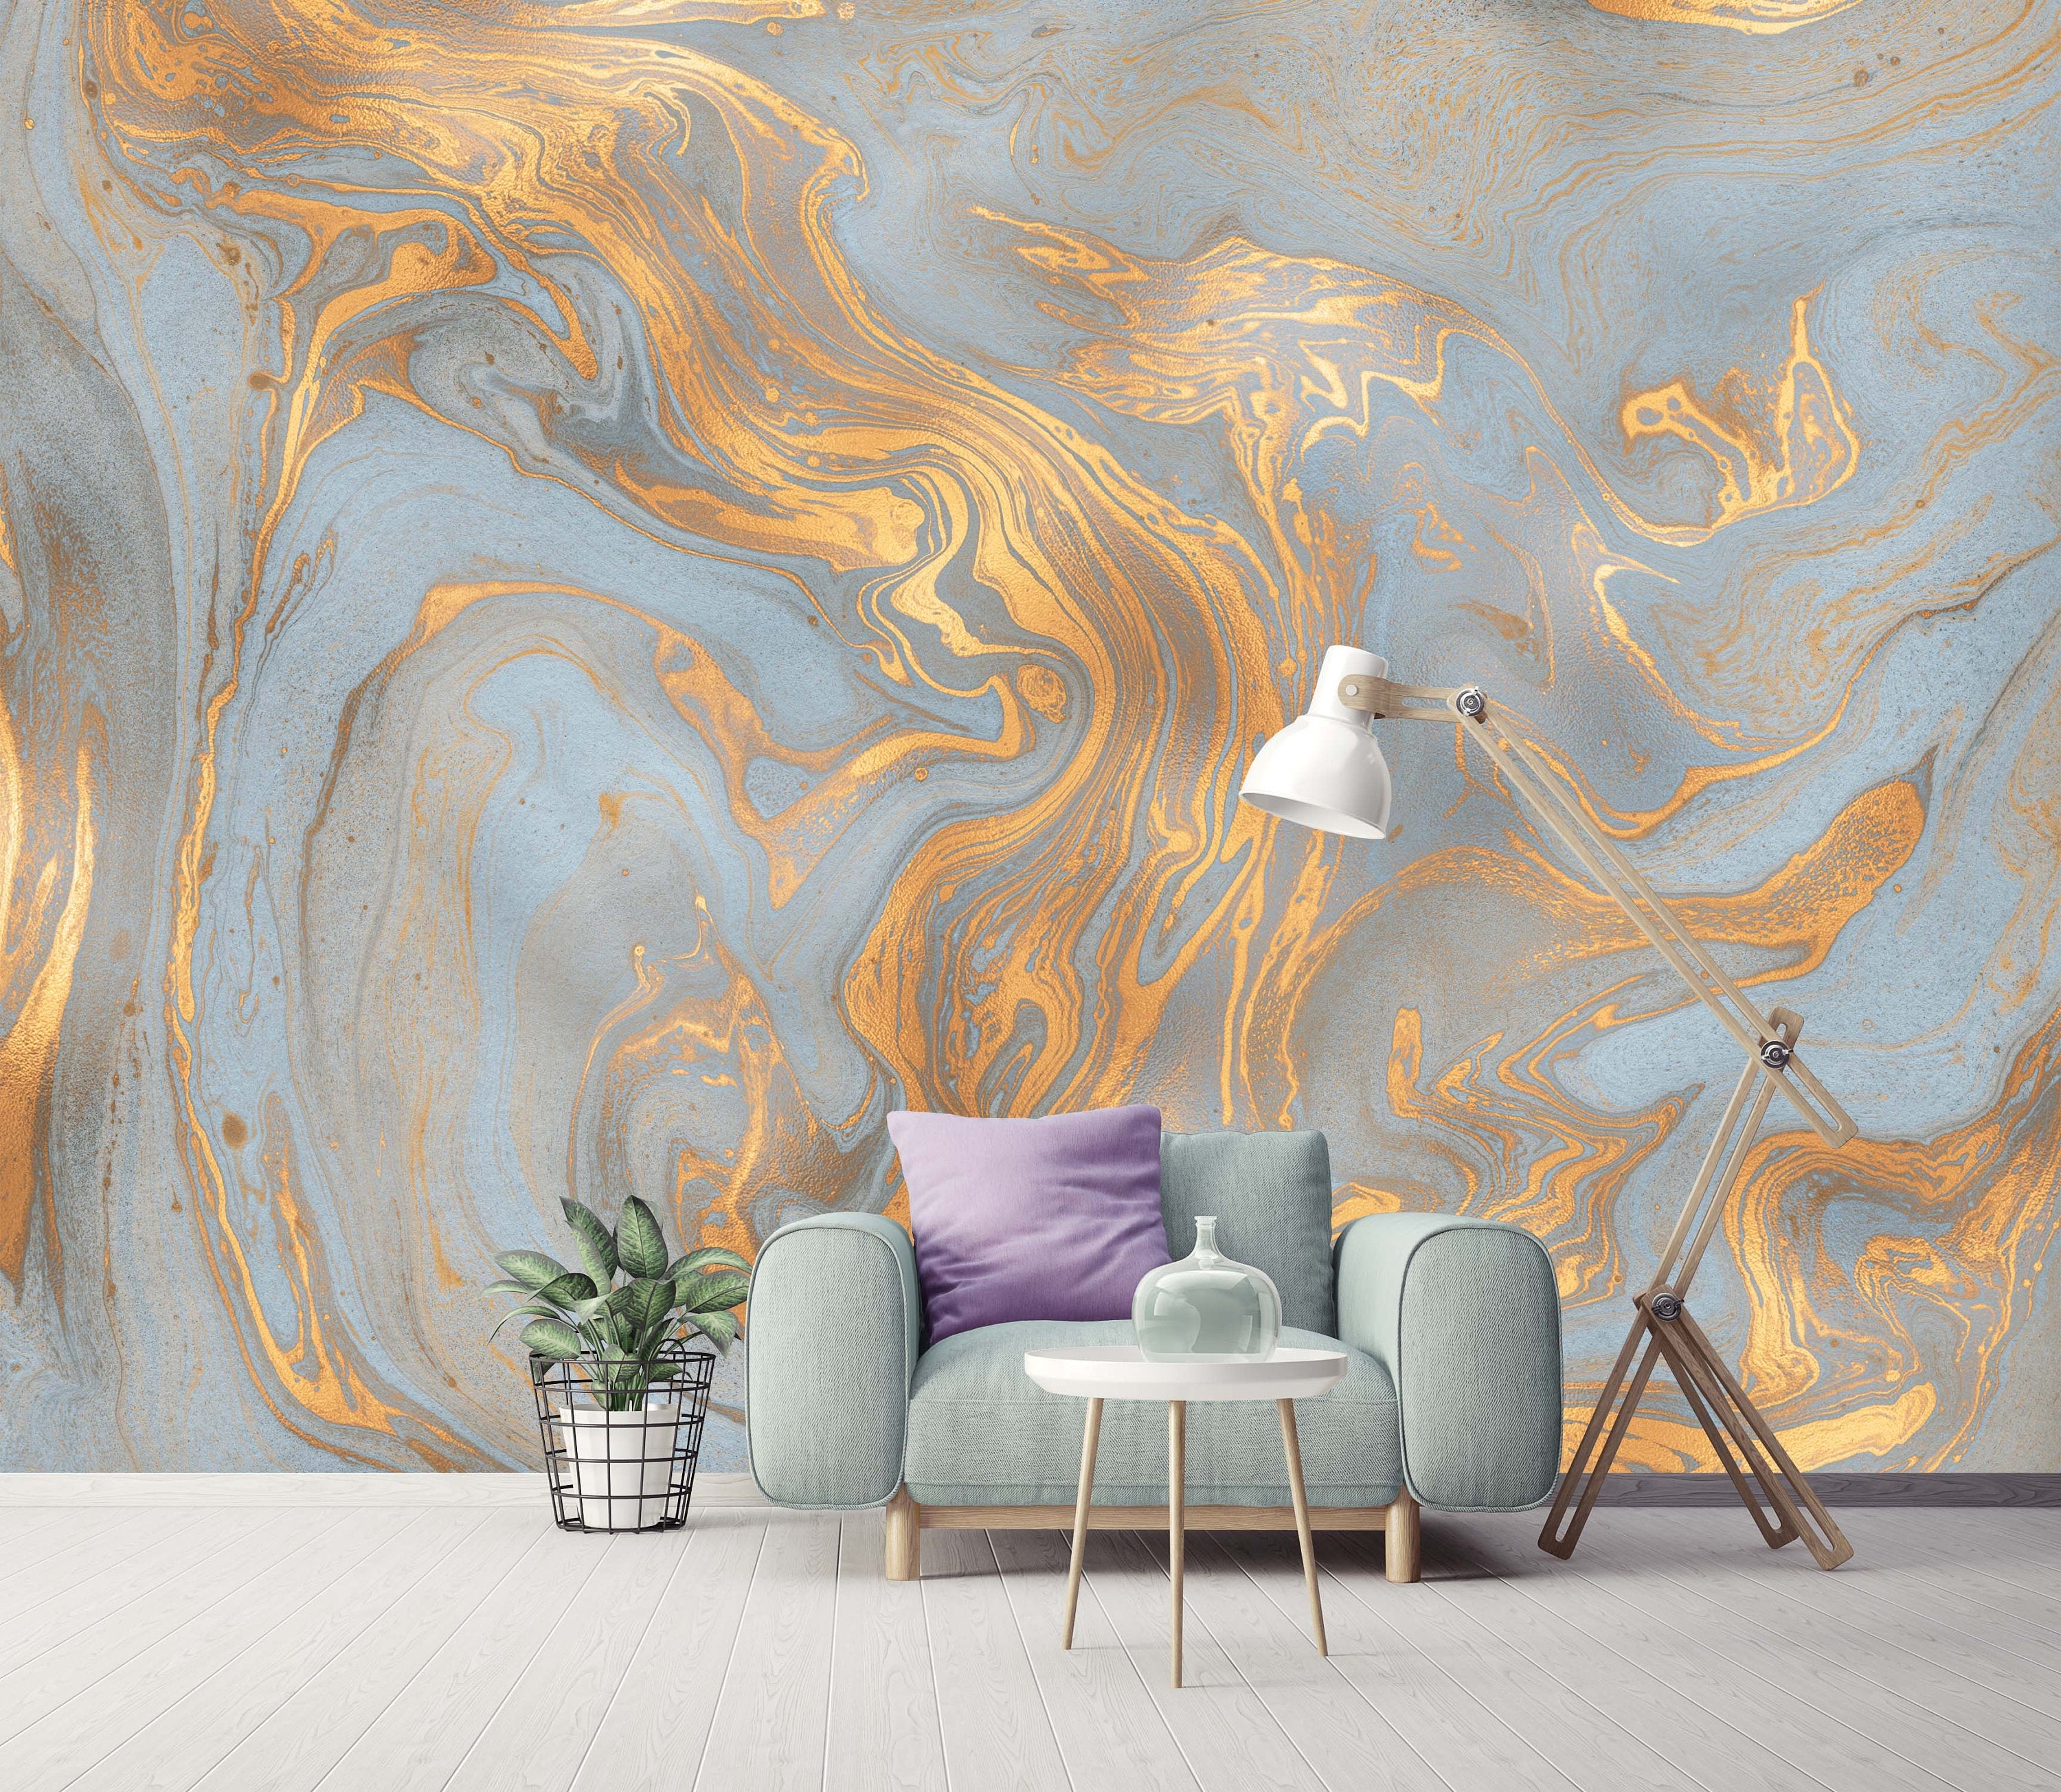 Background Creative Design Marble Texture Wallpaper Bathroom Restaurant Bedroom Living Room Cafe Office Mural Home Decor Wall Art